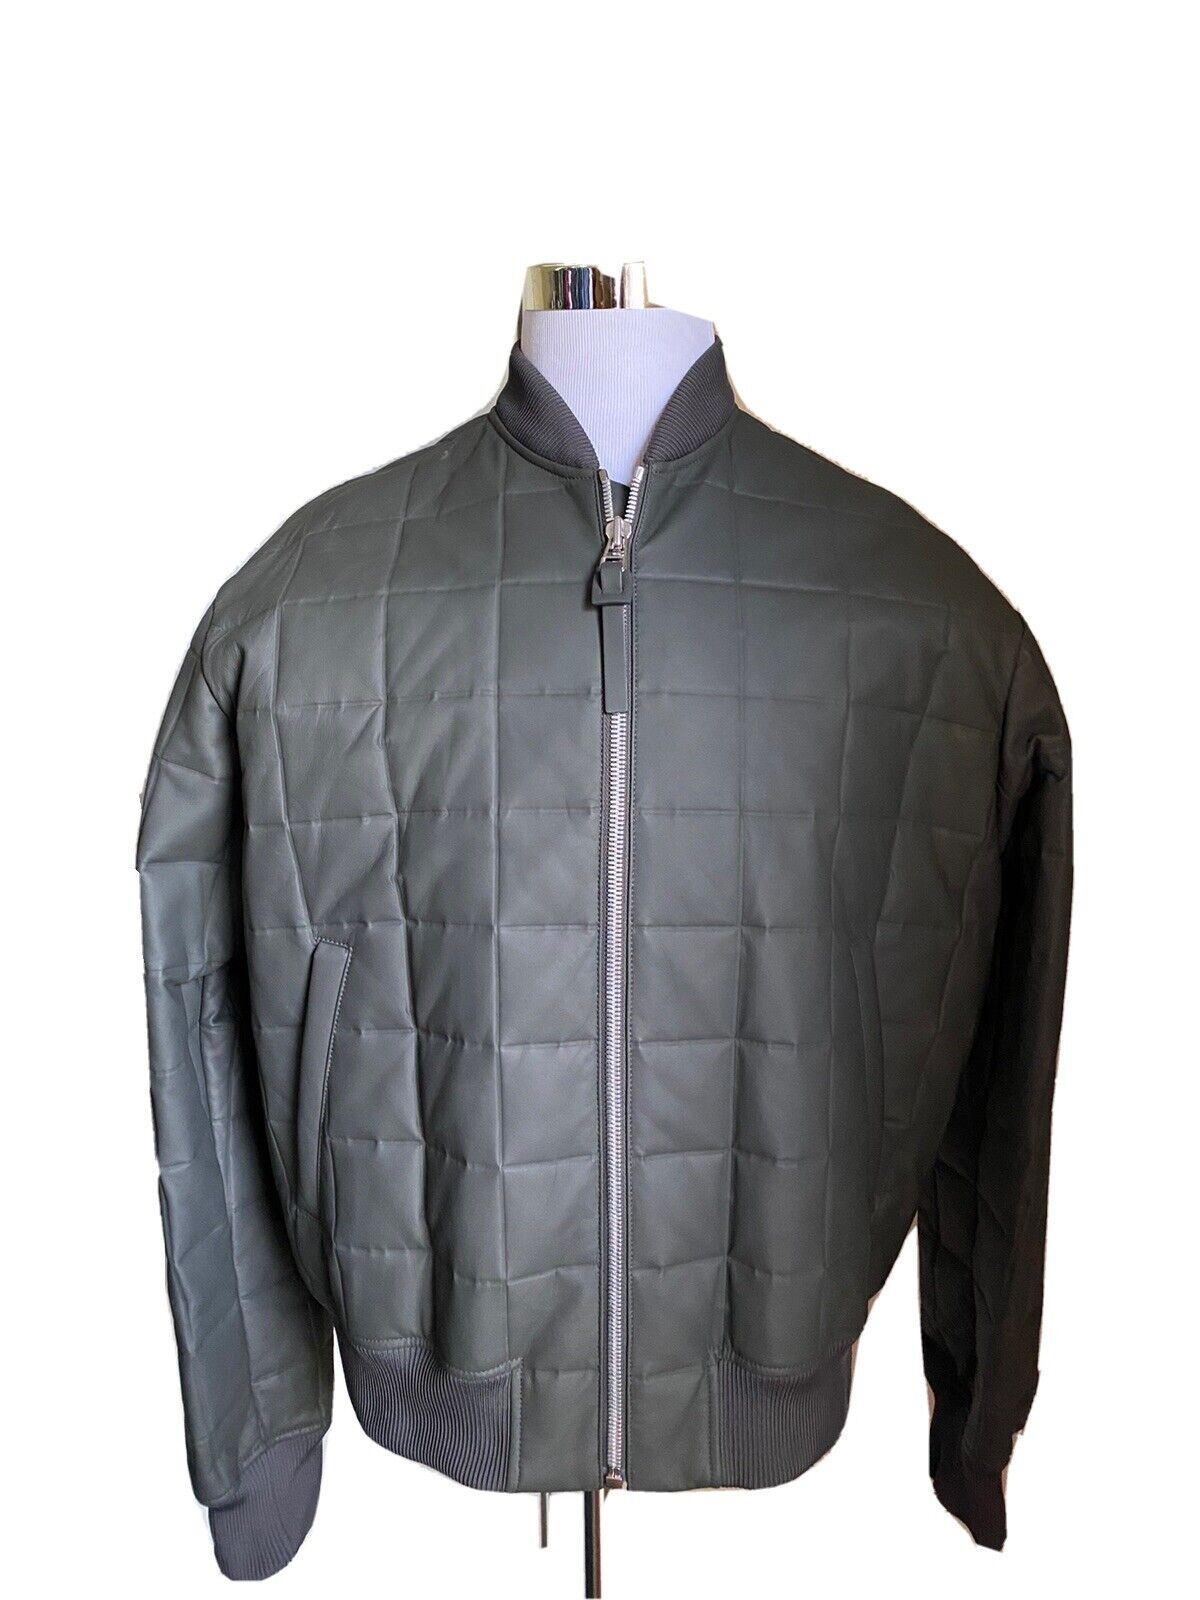 Новая мужская легкая кожаная куртка оверсайз Bottega Veneta за 6700 долларов США 40 США/50 ЕС